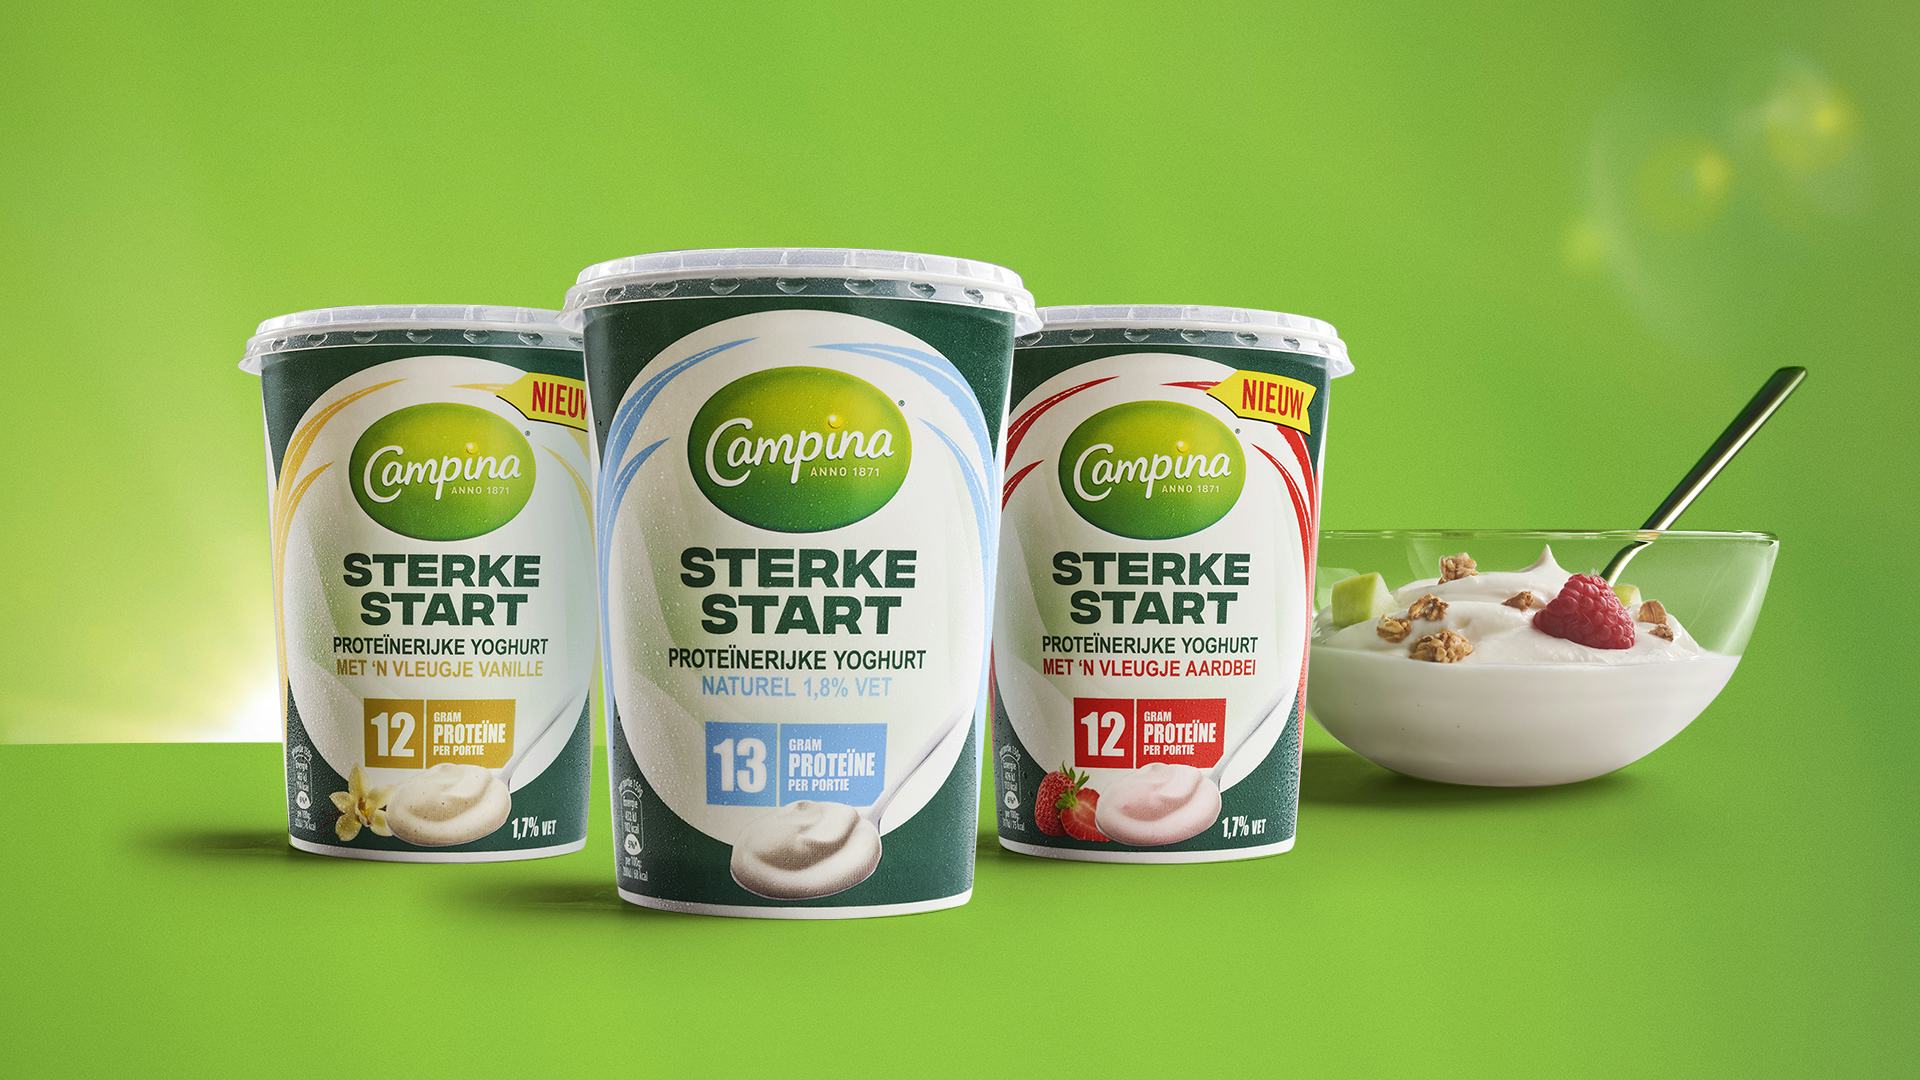 Friesland Campina komt met een vanille en aardbei variant van Sterke Start yoghurt.